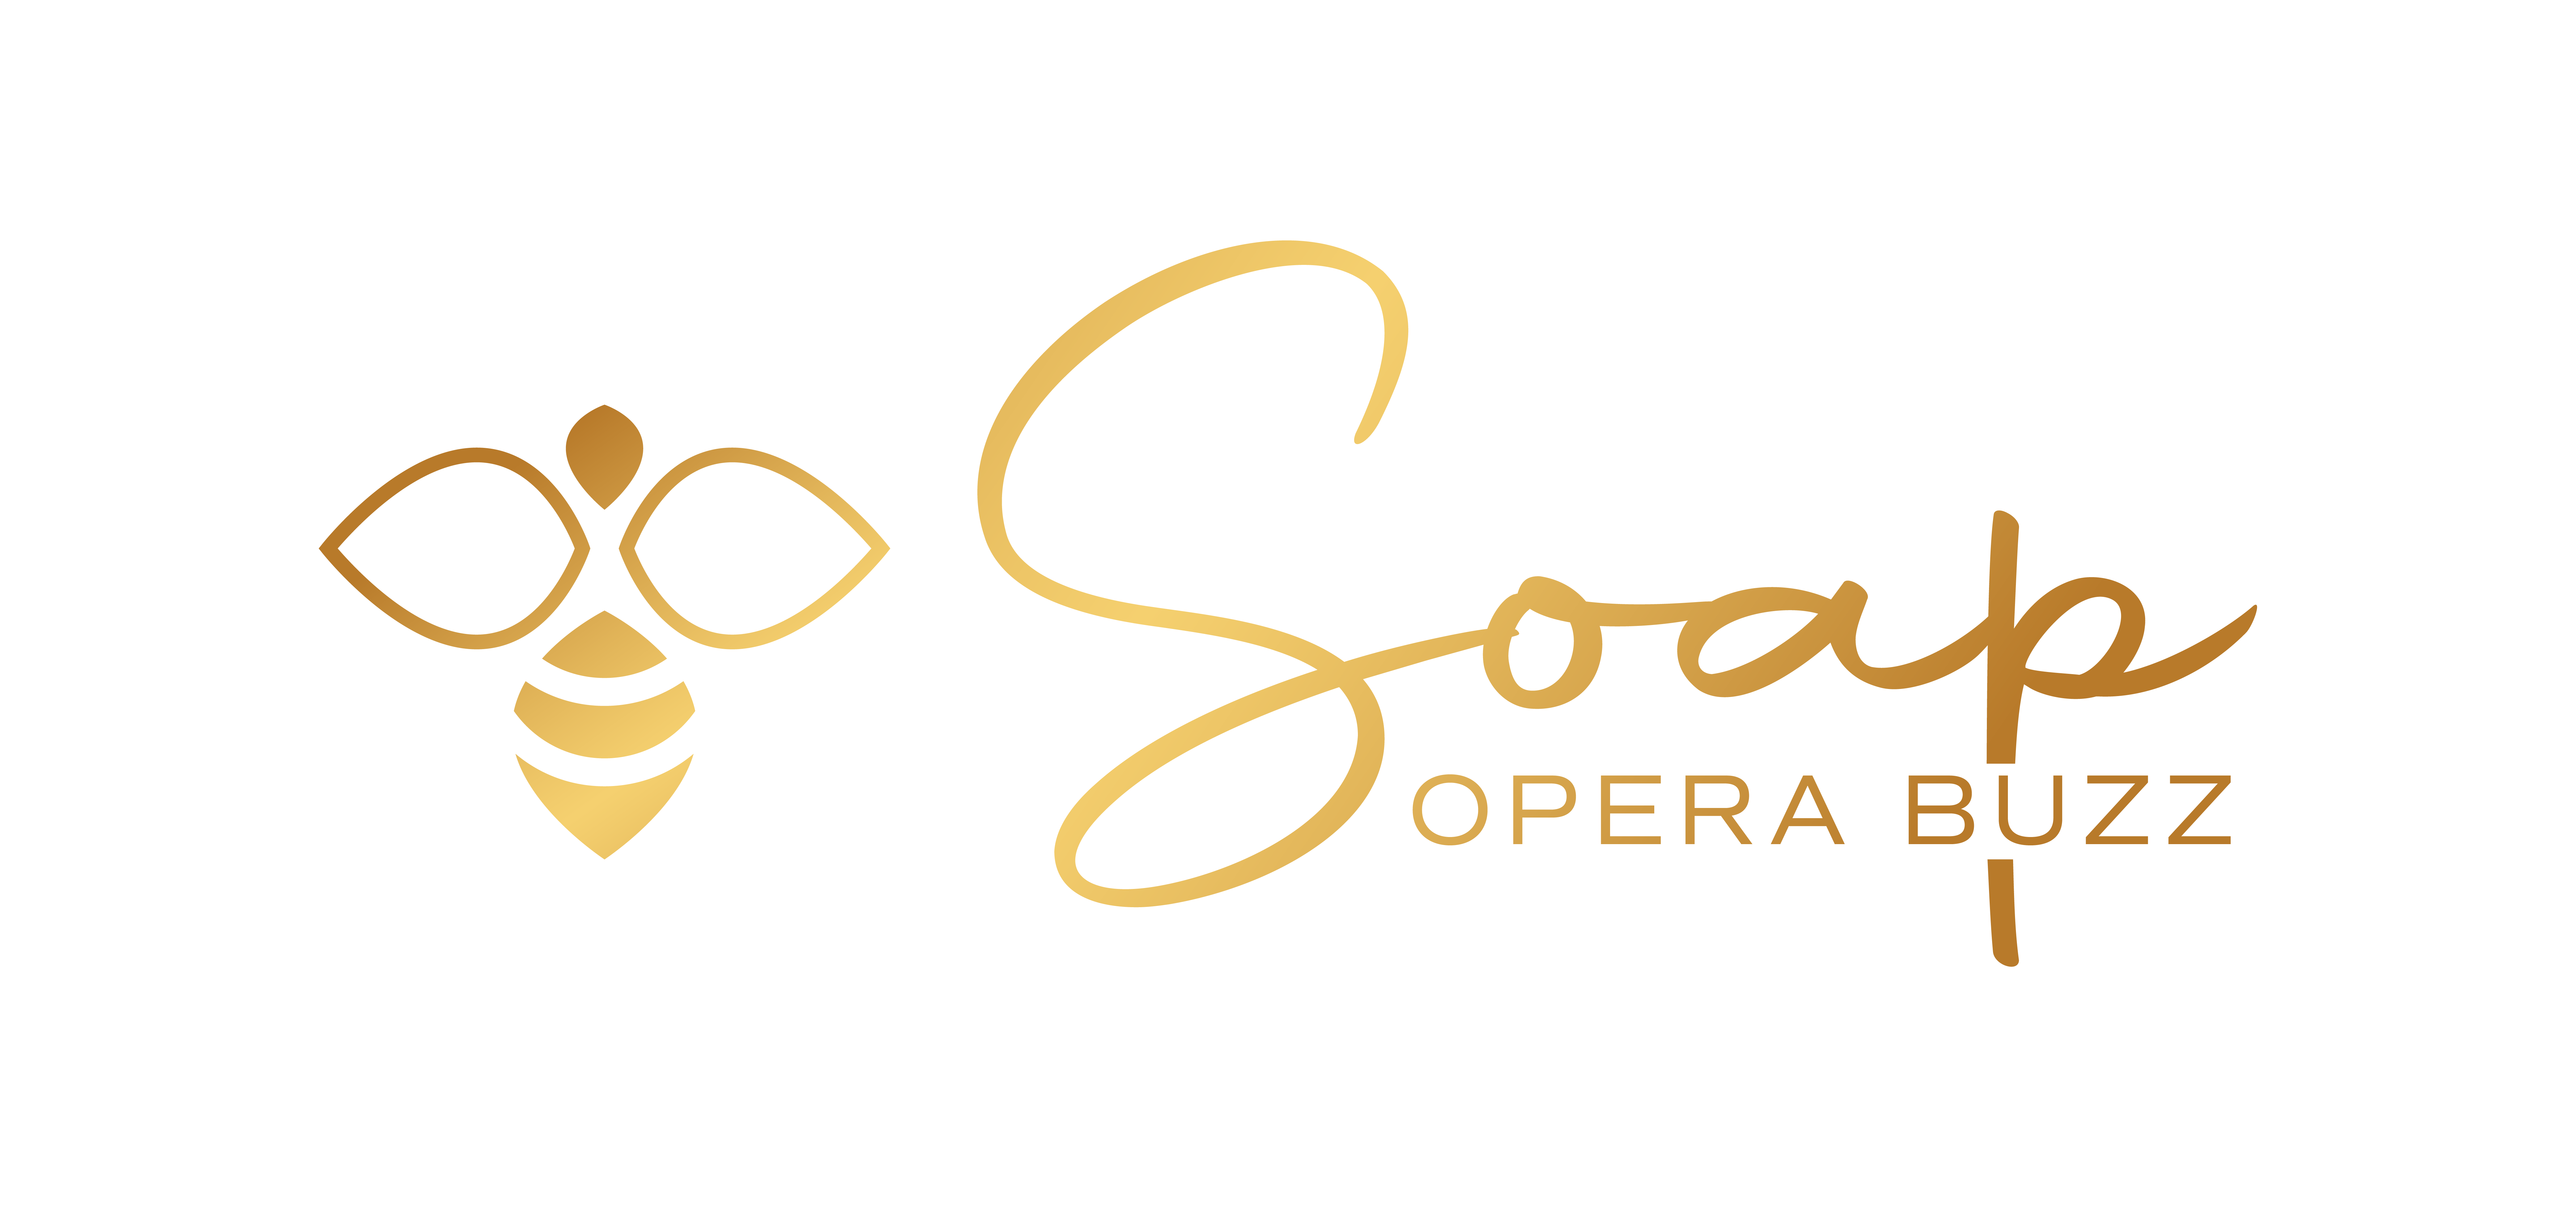 Soap Opera Buzz